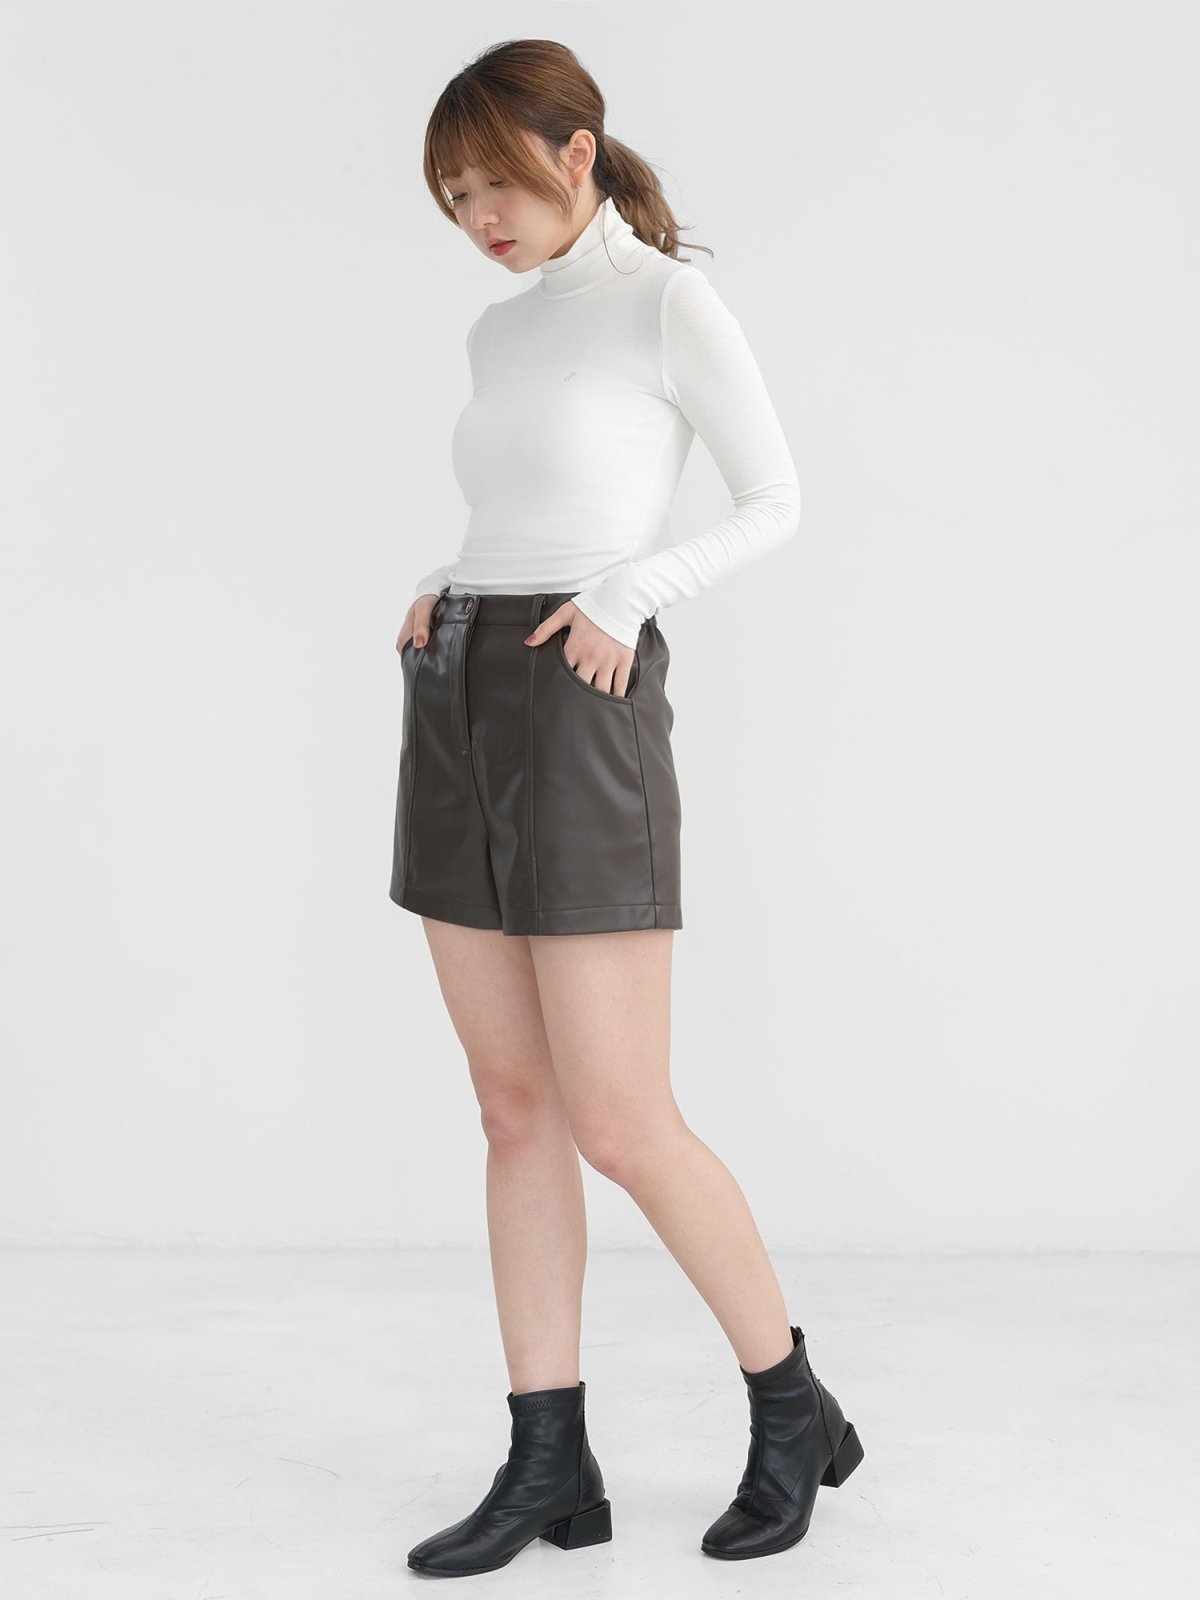 Leanna Leather Shorts - DAG-DD1292-23BlackS - Black - S - D'zage Designs